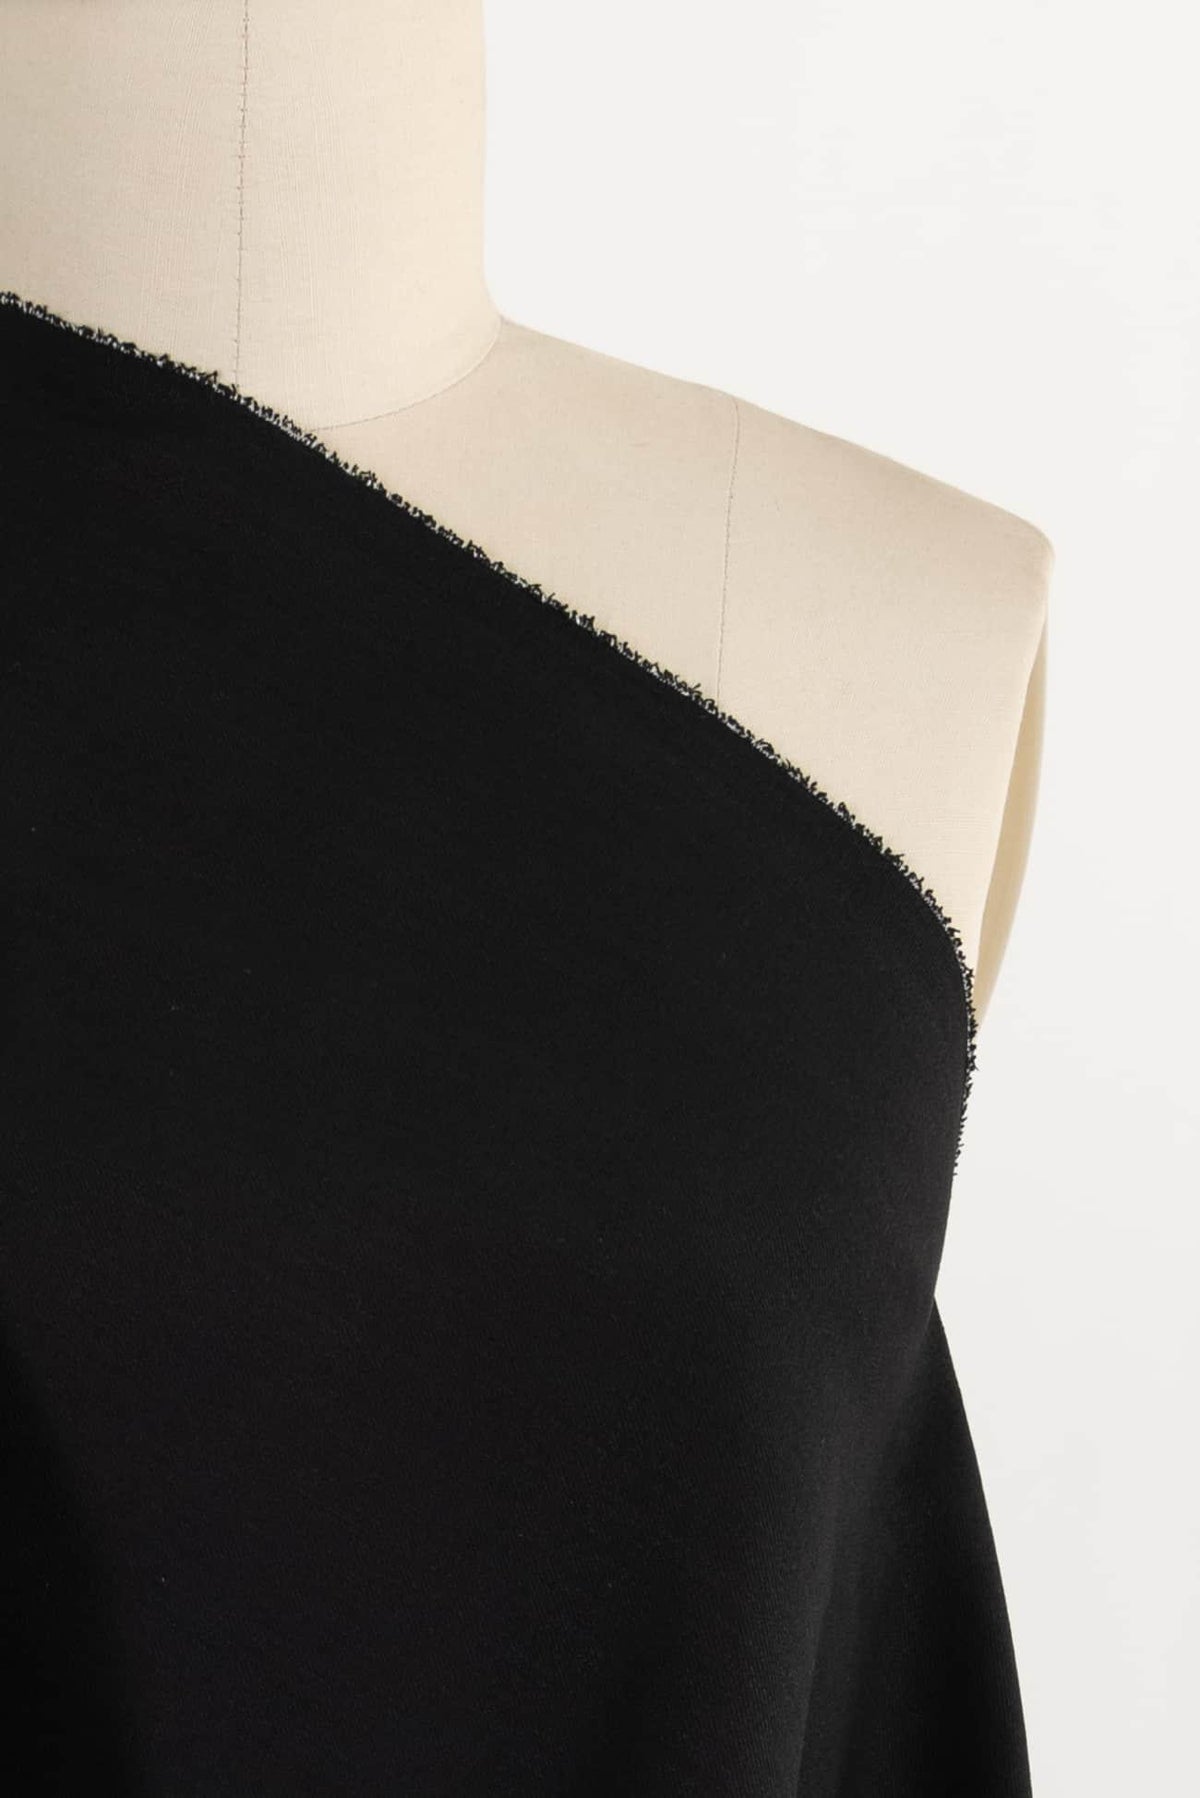 Brando Black Stretch Cotton Denim Woven - Marcy Tilton Fabrics